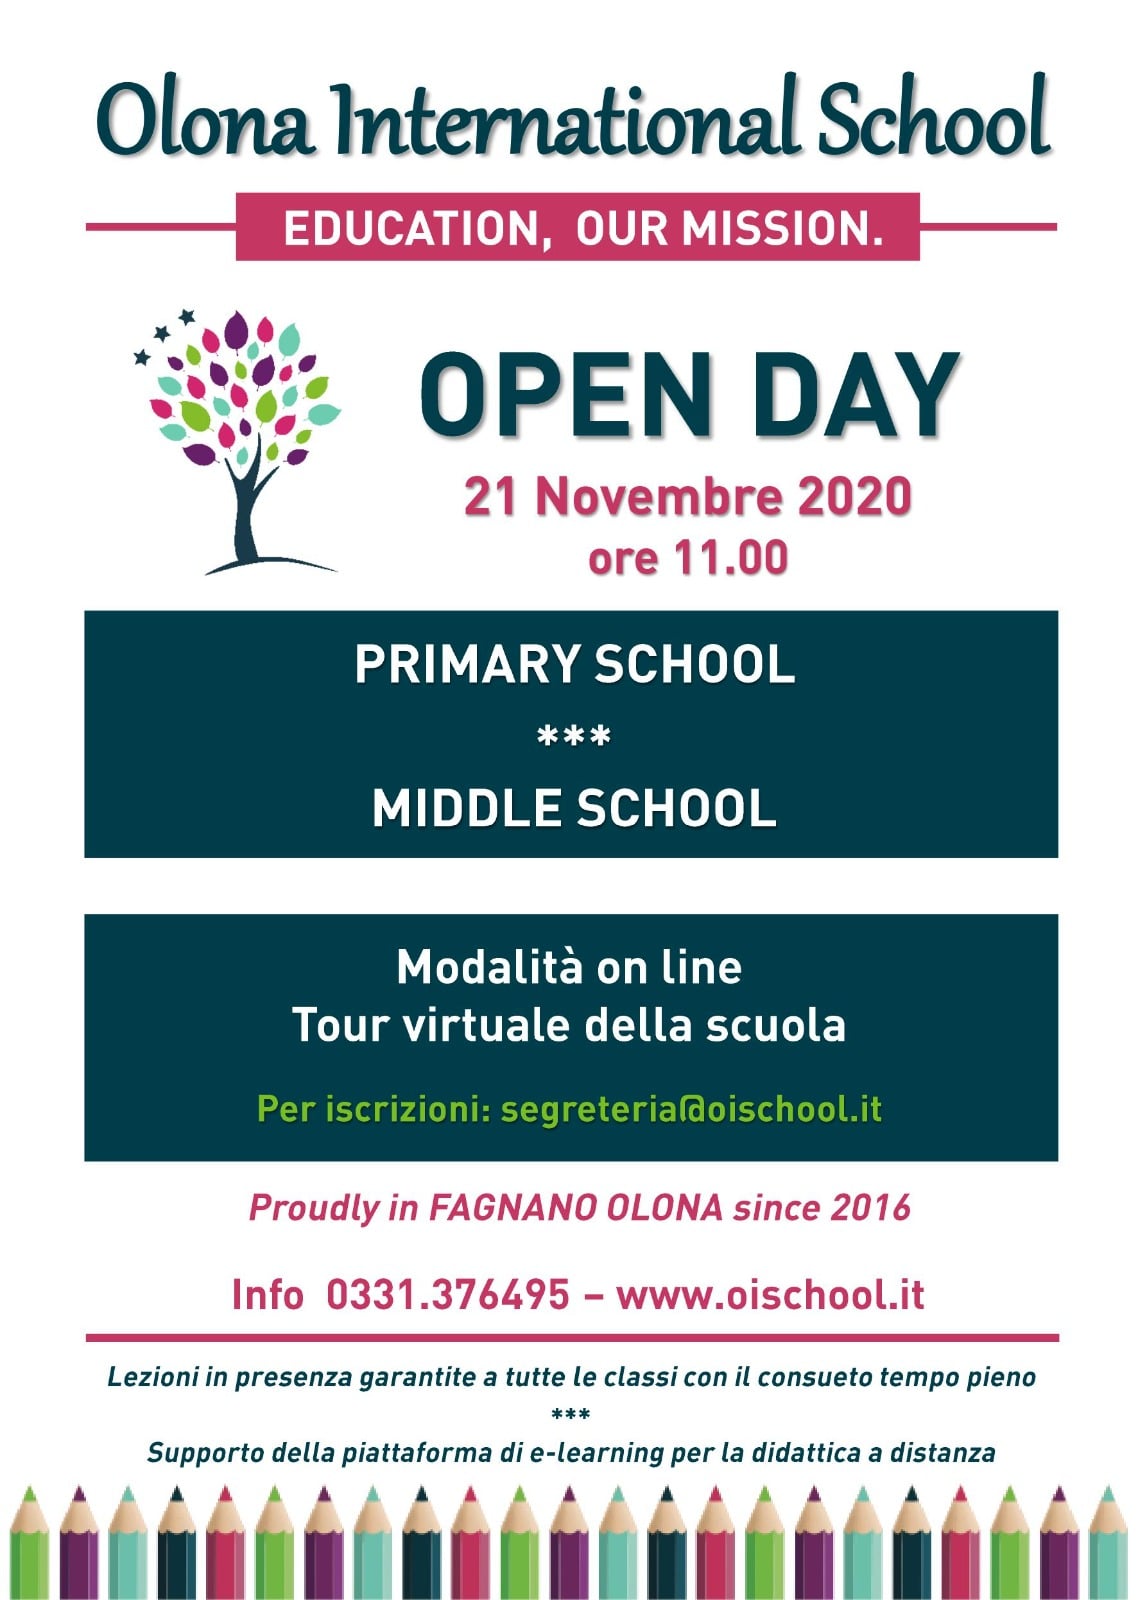 21 Novembre 2020 alle ore 11.00 Openday Online Olona International School!